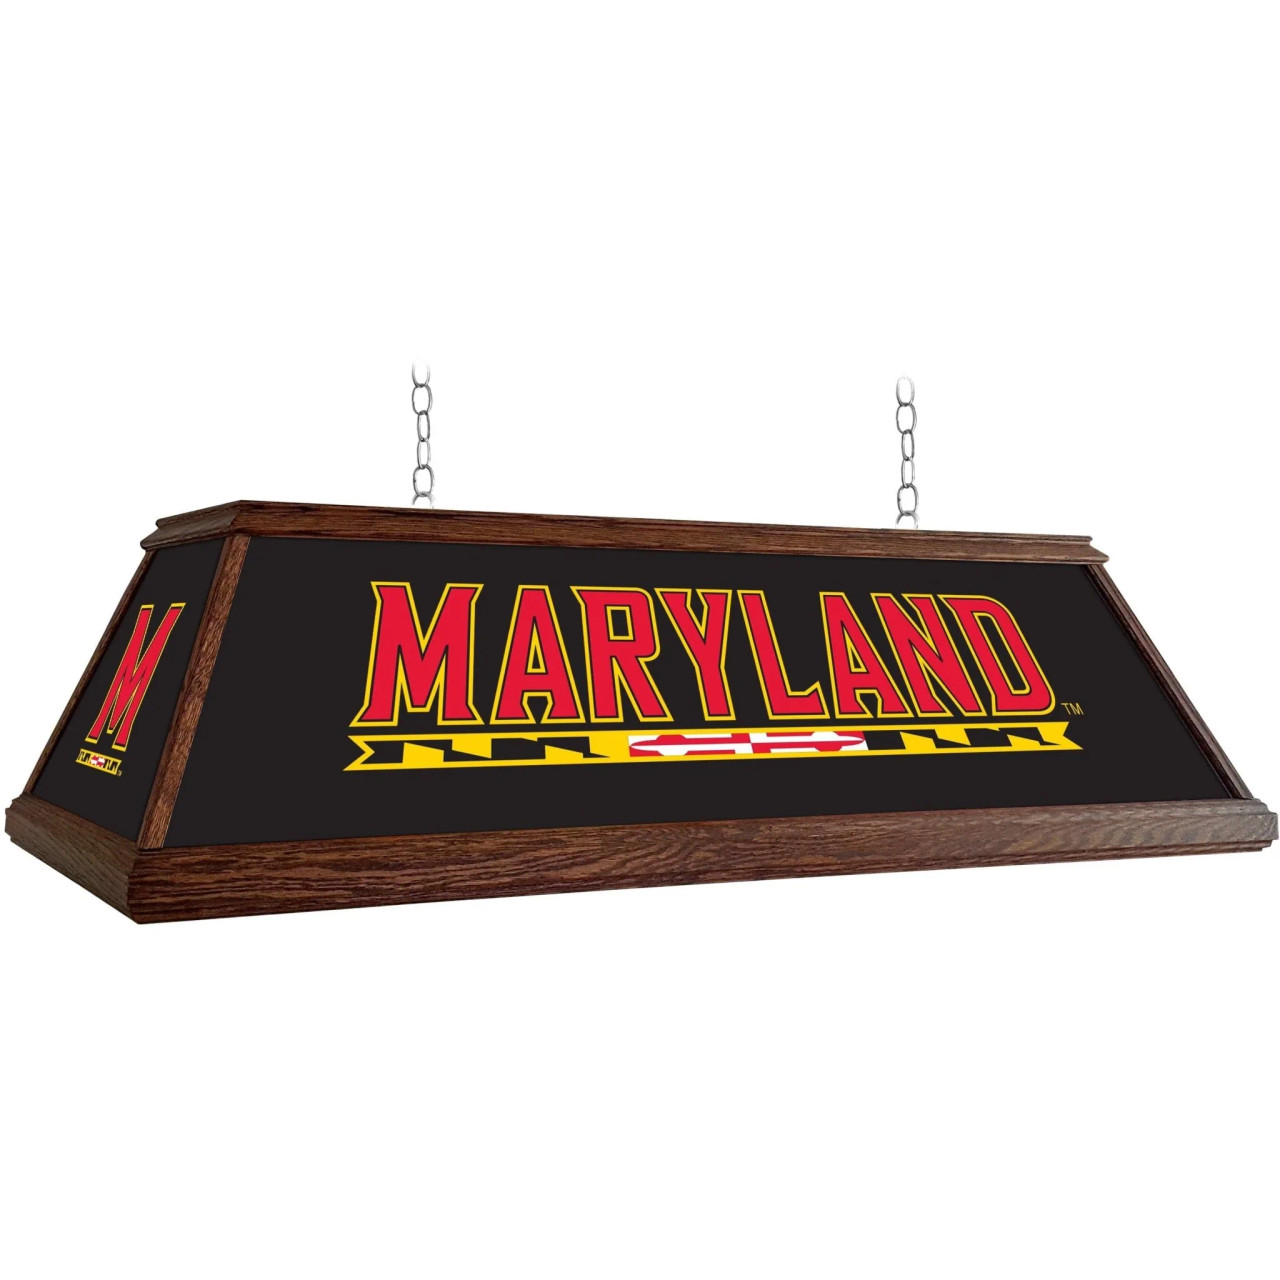 MD,  Maryland, Terripans, Premium, Wood, Billiard, Pool, Table, Light, Lamp, NCMRYT-330-01A, NCMRYT-330-01B, The Fan-Brand, 688099298326